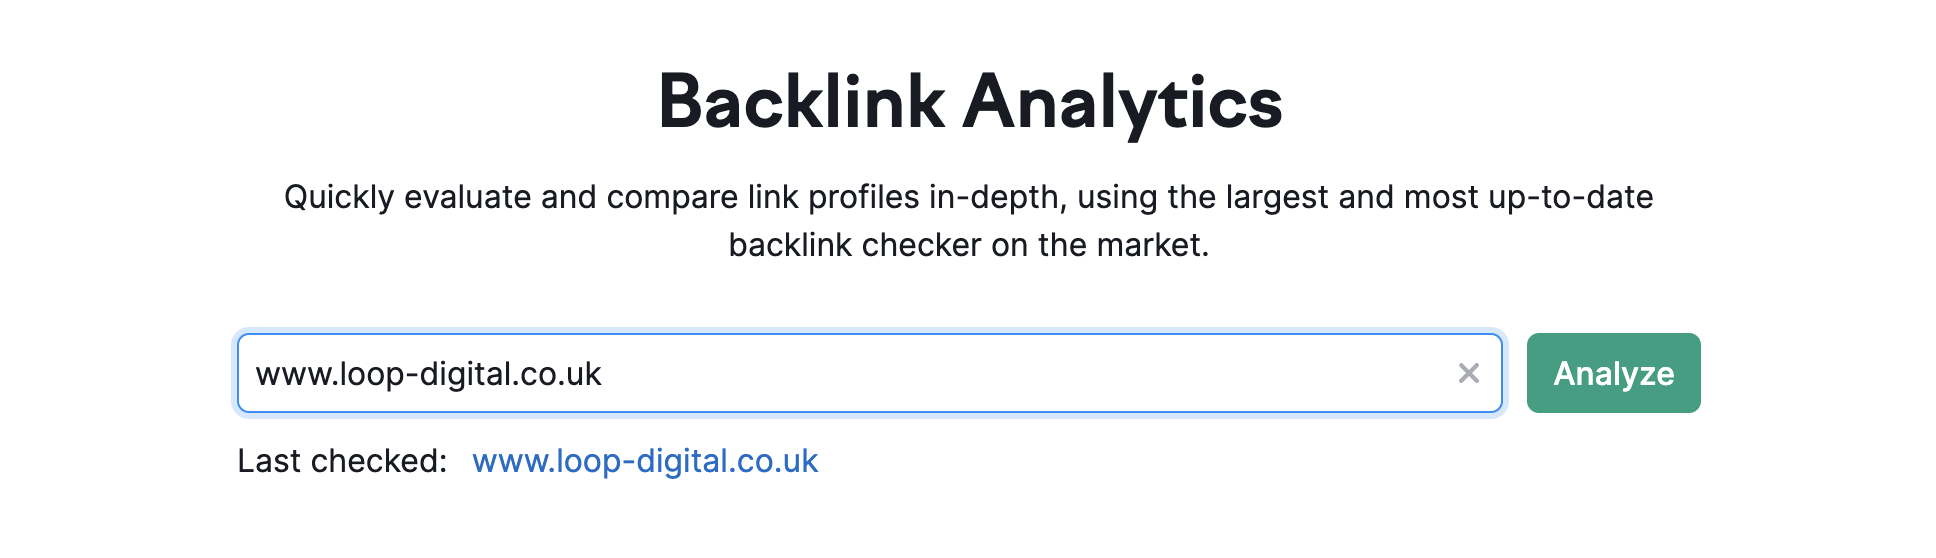 backlink analytics tool in semrush tool